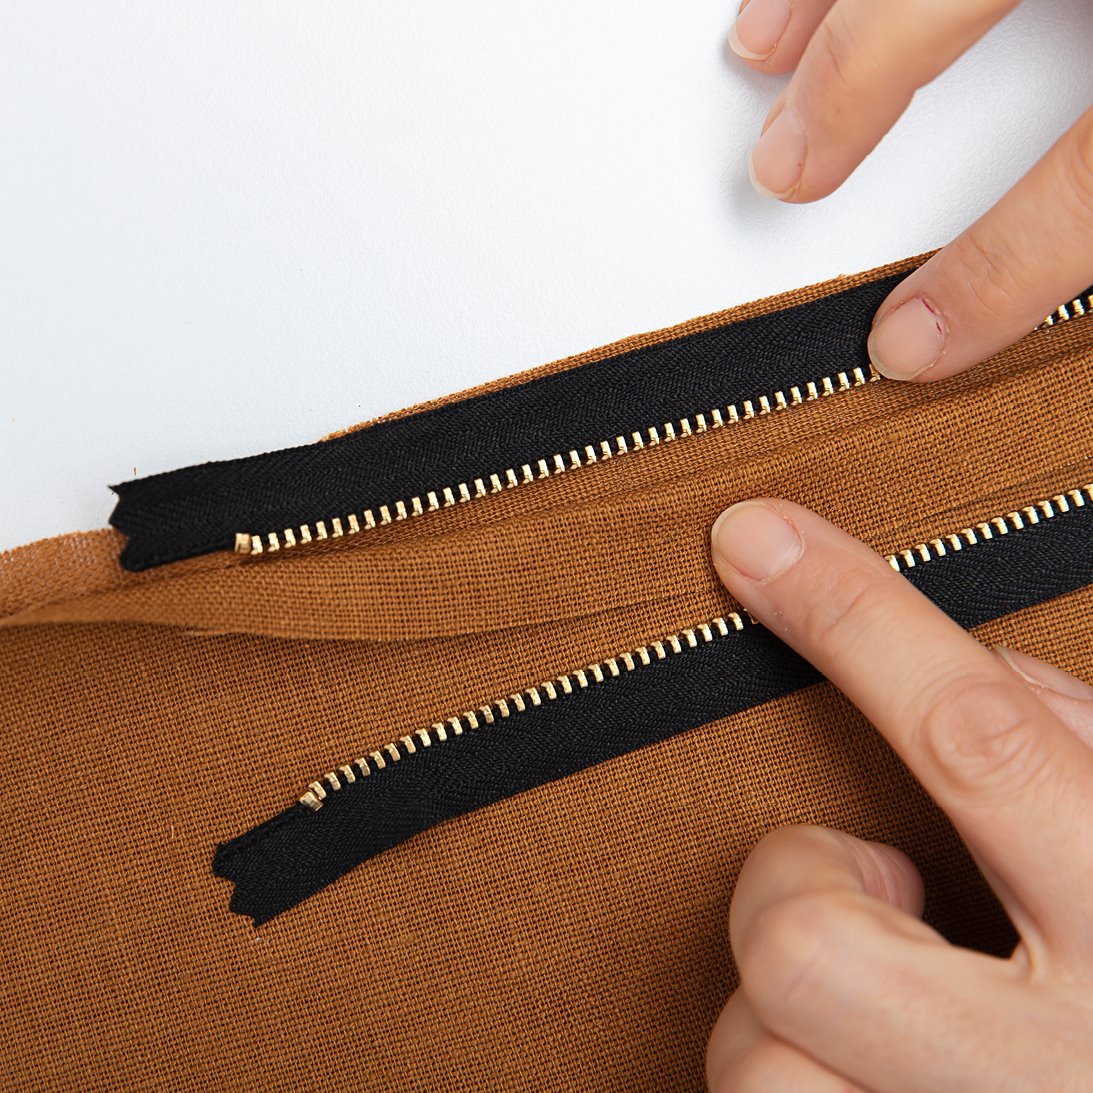 How to sew a zipper Diy8009-step3.jpg